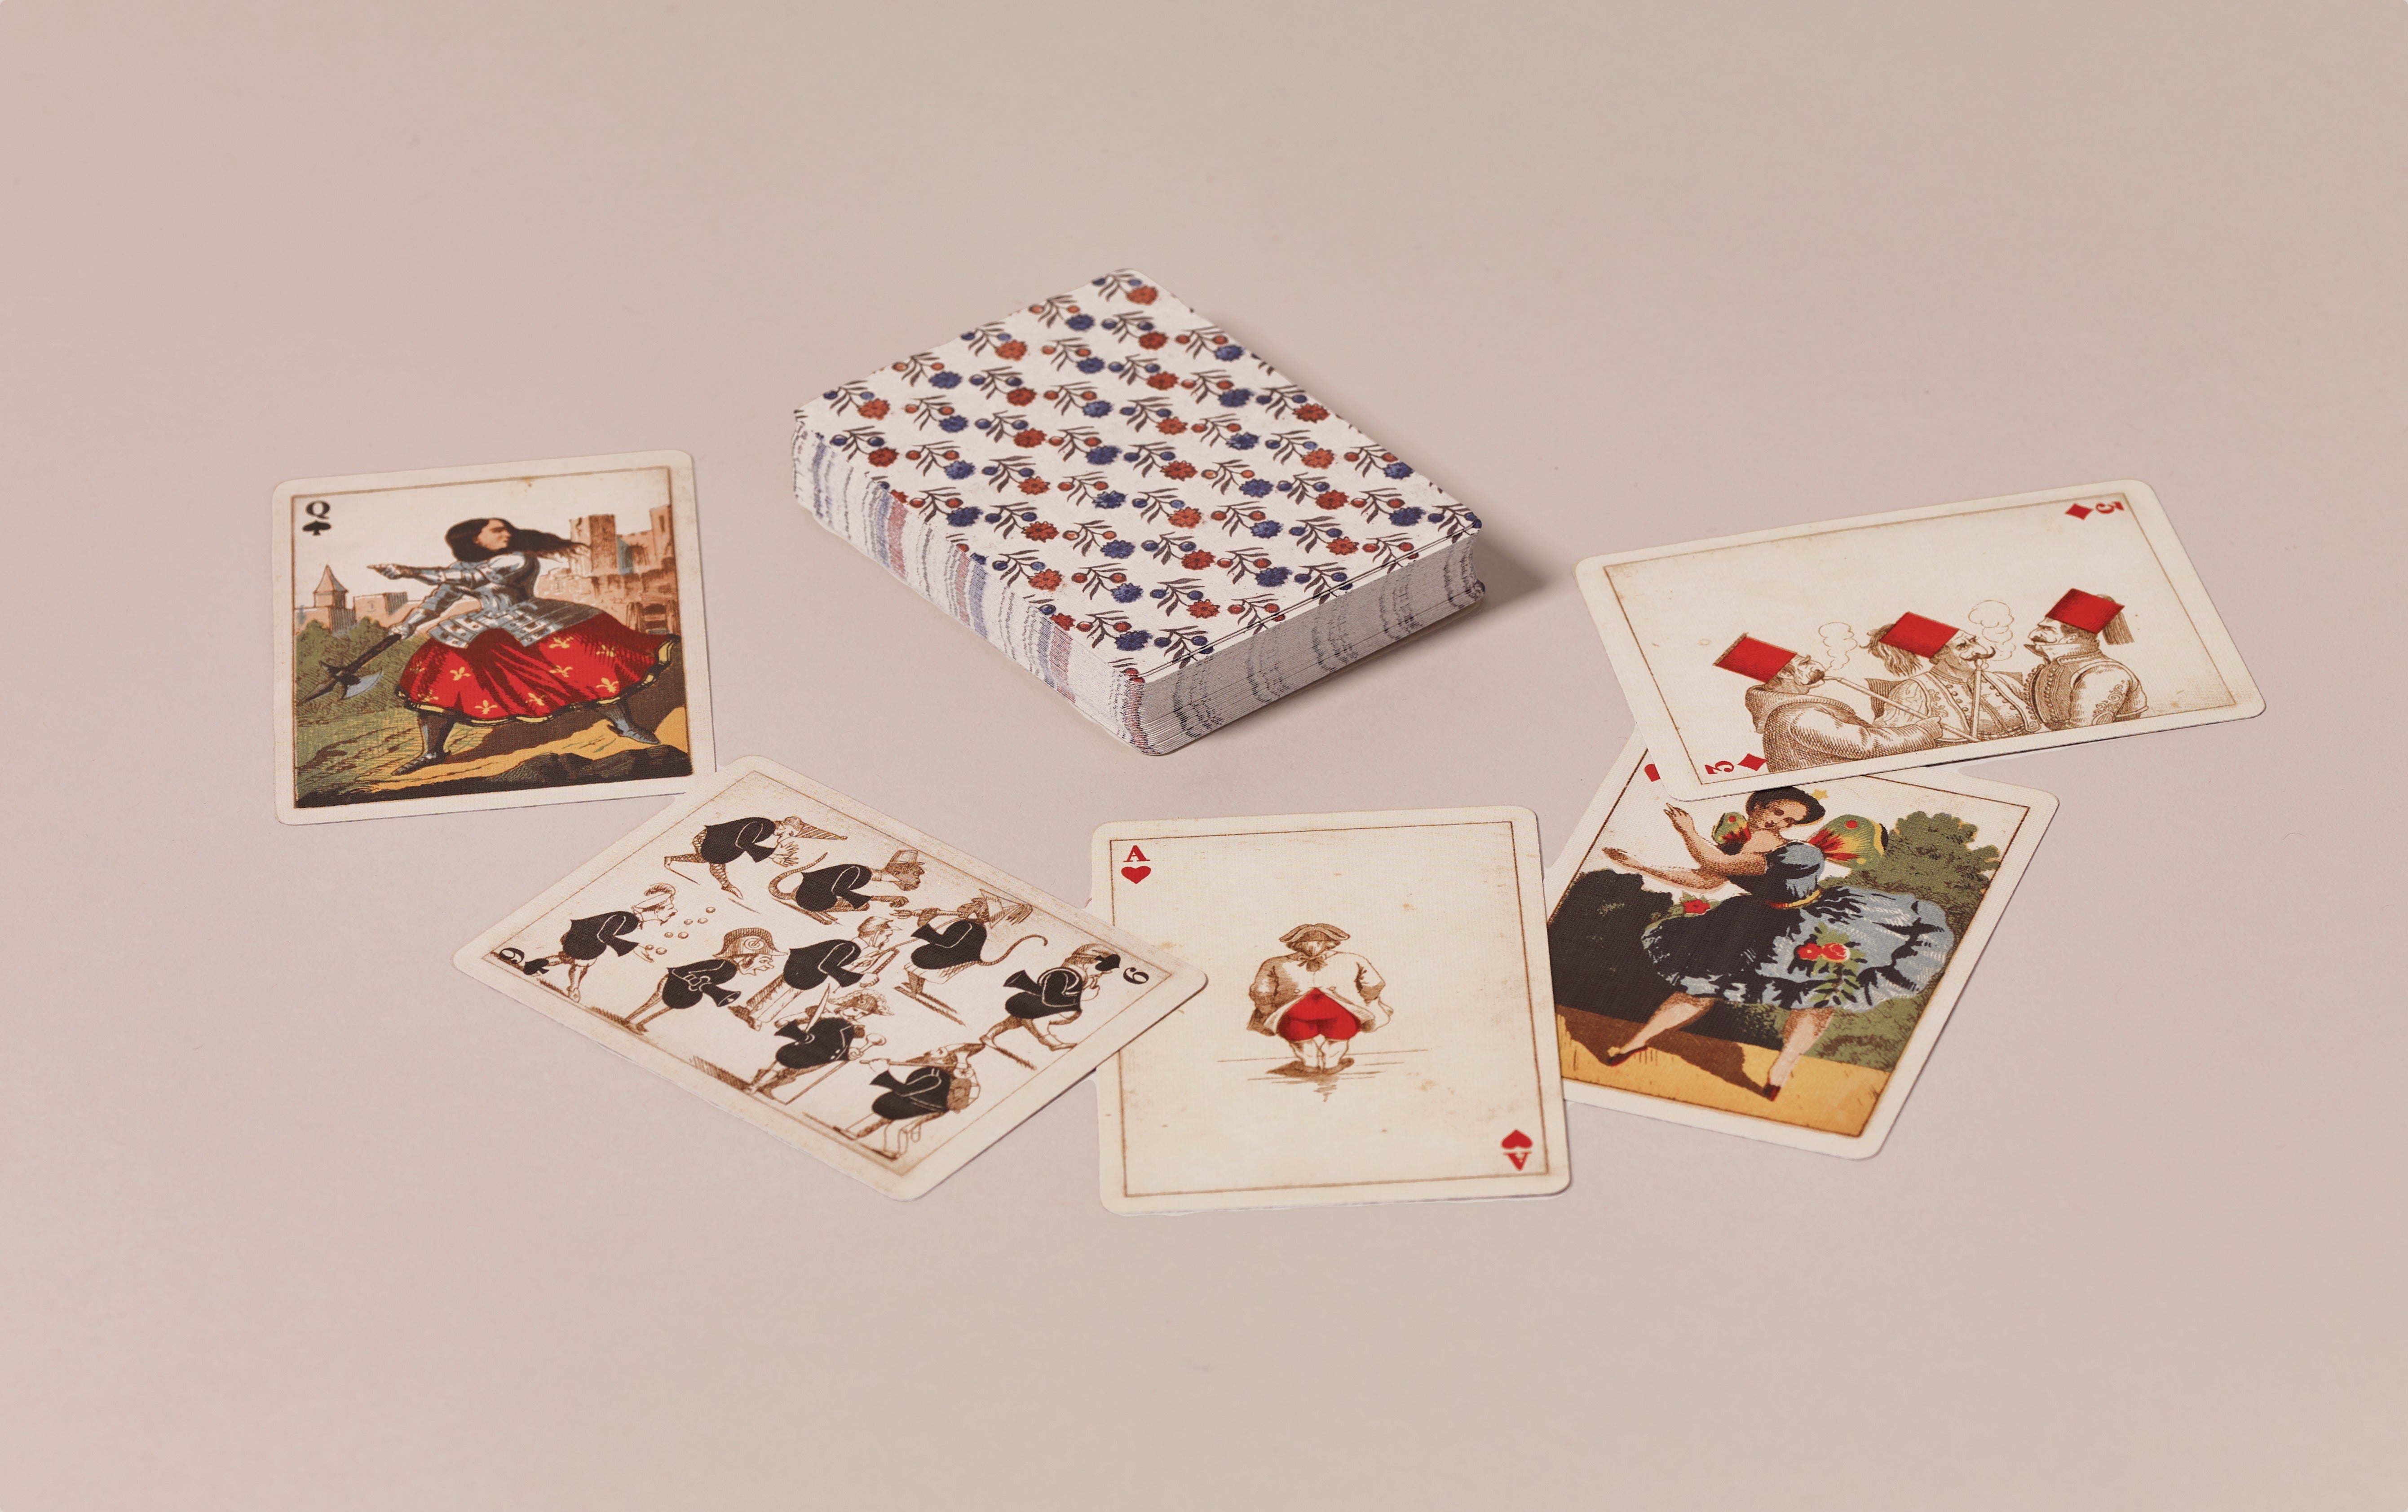 Historical John Derian Playing Cards, 19th c English Pattern